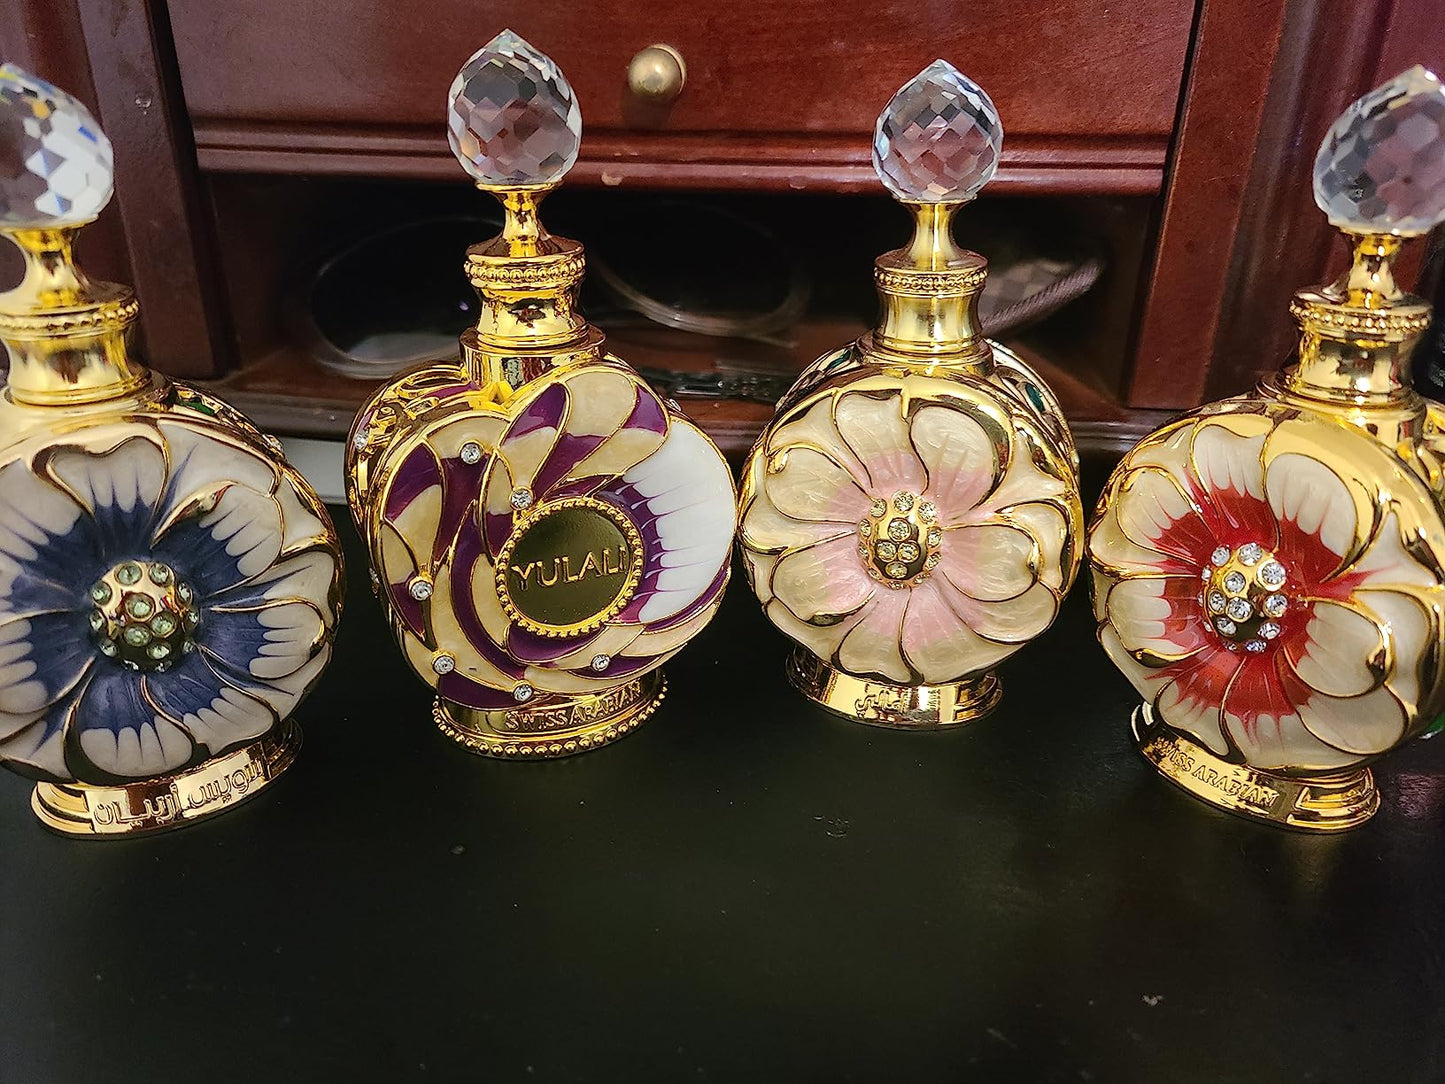 Swiss Arabian Amazing Collection Layali,Yulali,Amaali & Layali Rouge concentrated perfume oils 15ML (0.5Oz). (AMAZING COLLECTION)